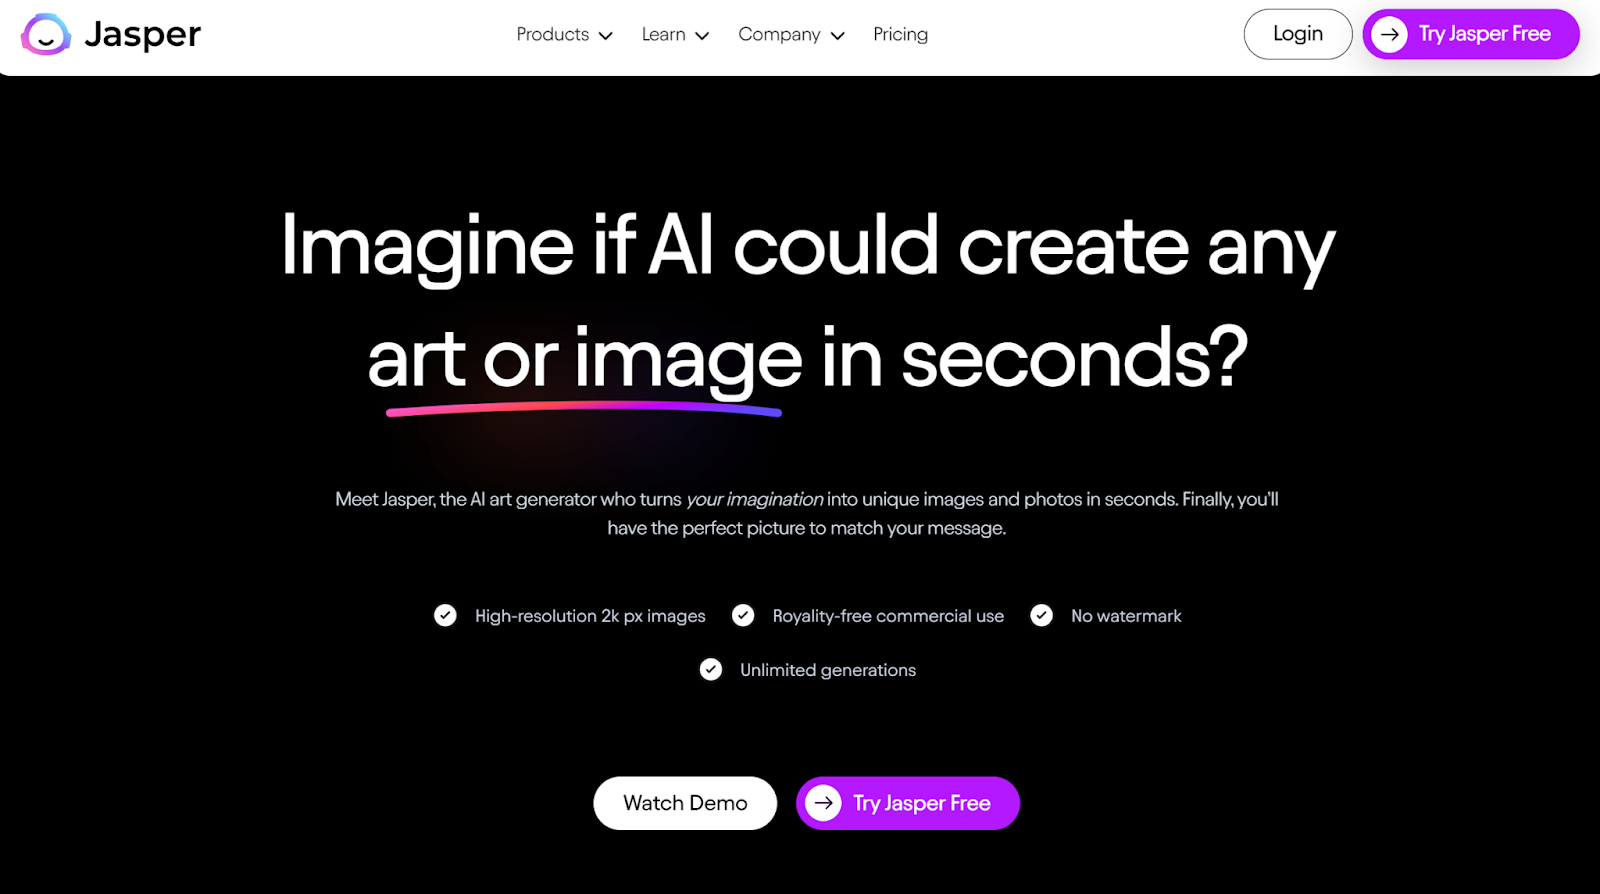 The Jasper AI image generator homepage.